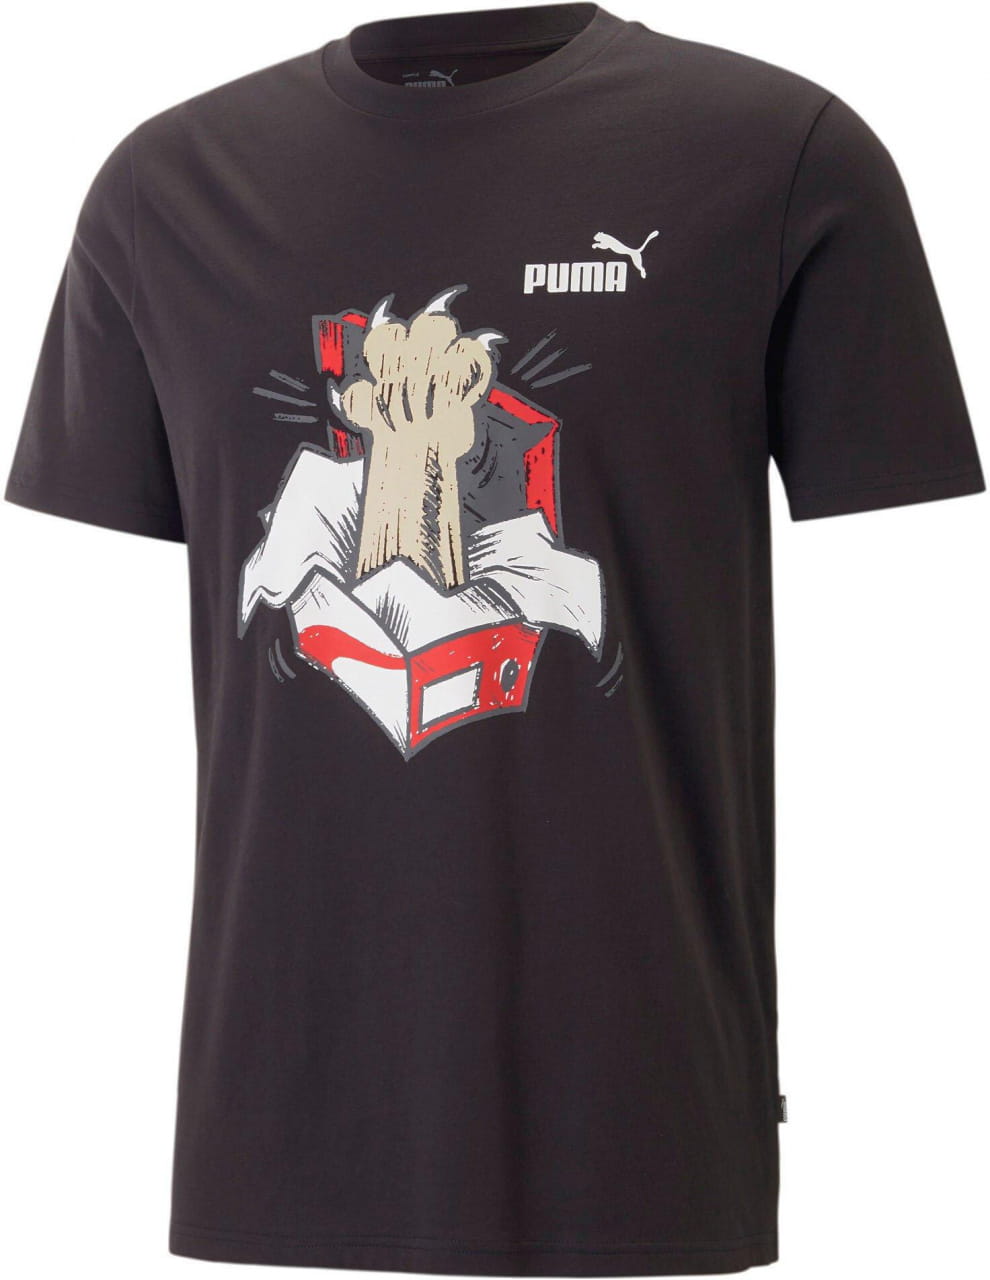 Sporthemd für Männer Puma Graphics Sneaker Tee